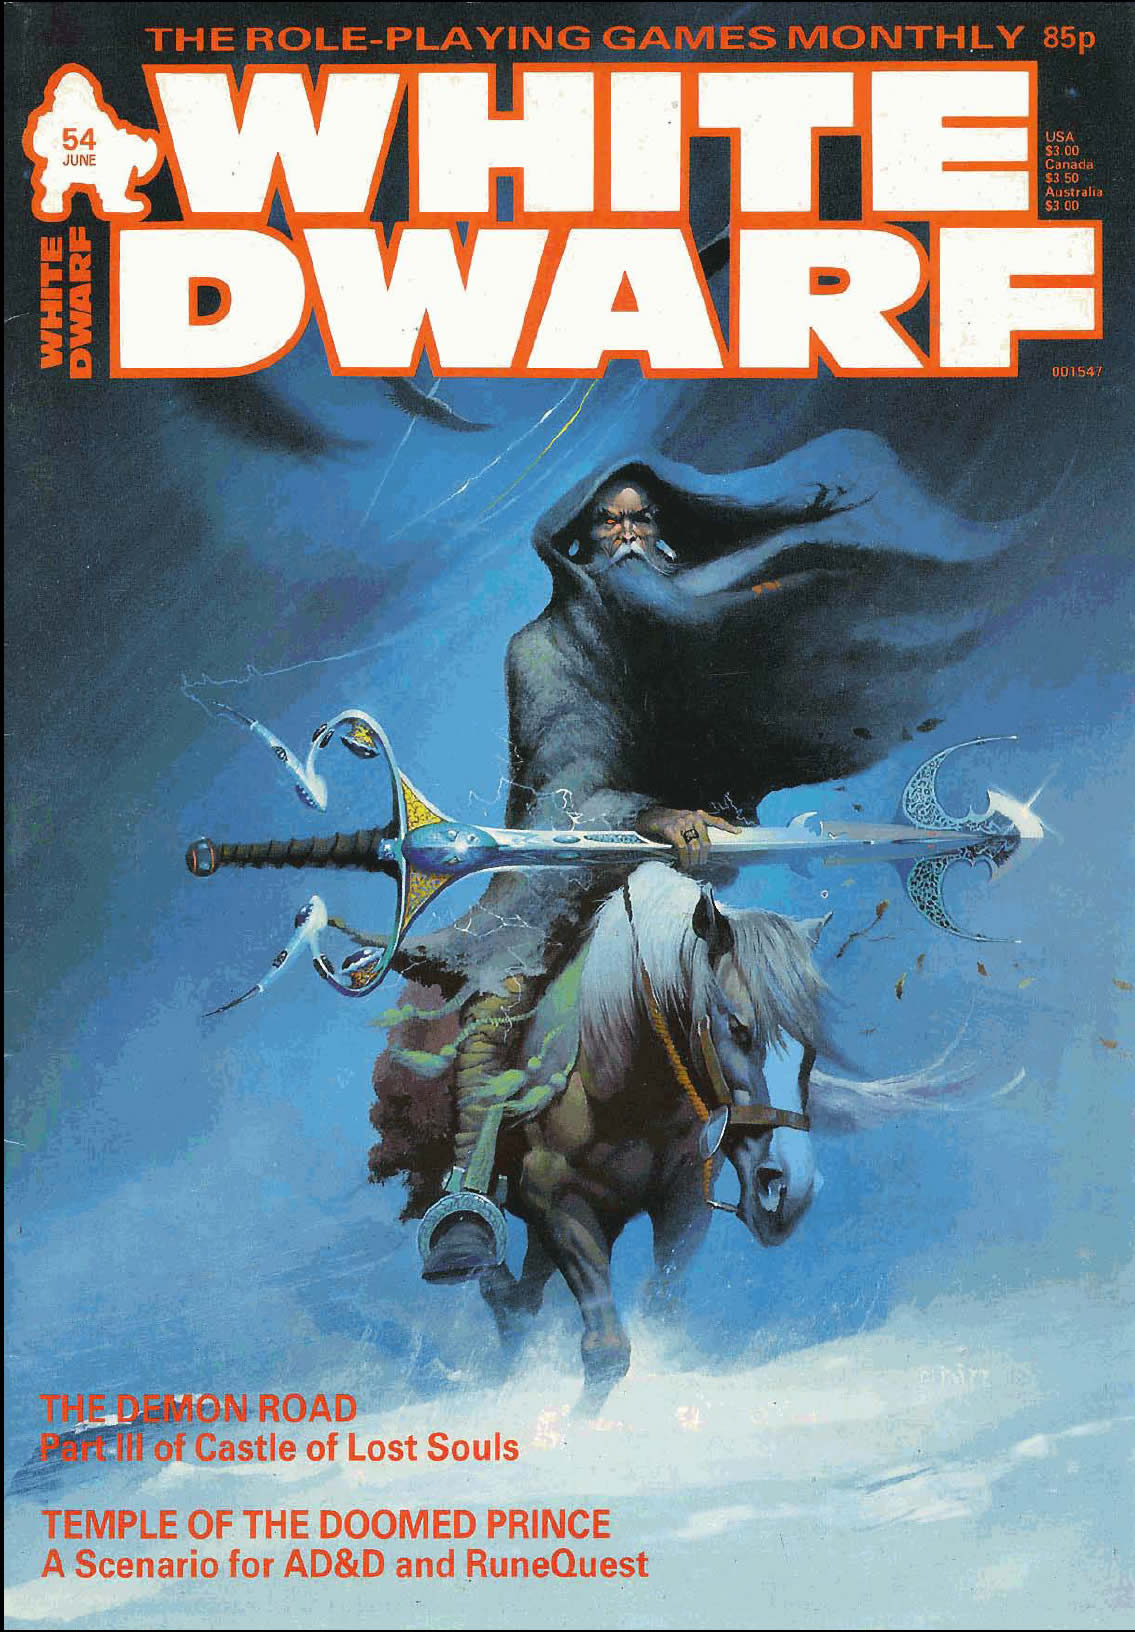 White Dwarf Magazine Covers Wallpaper Image